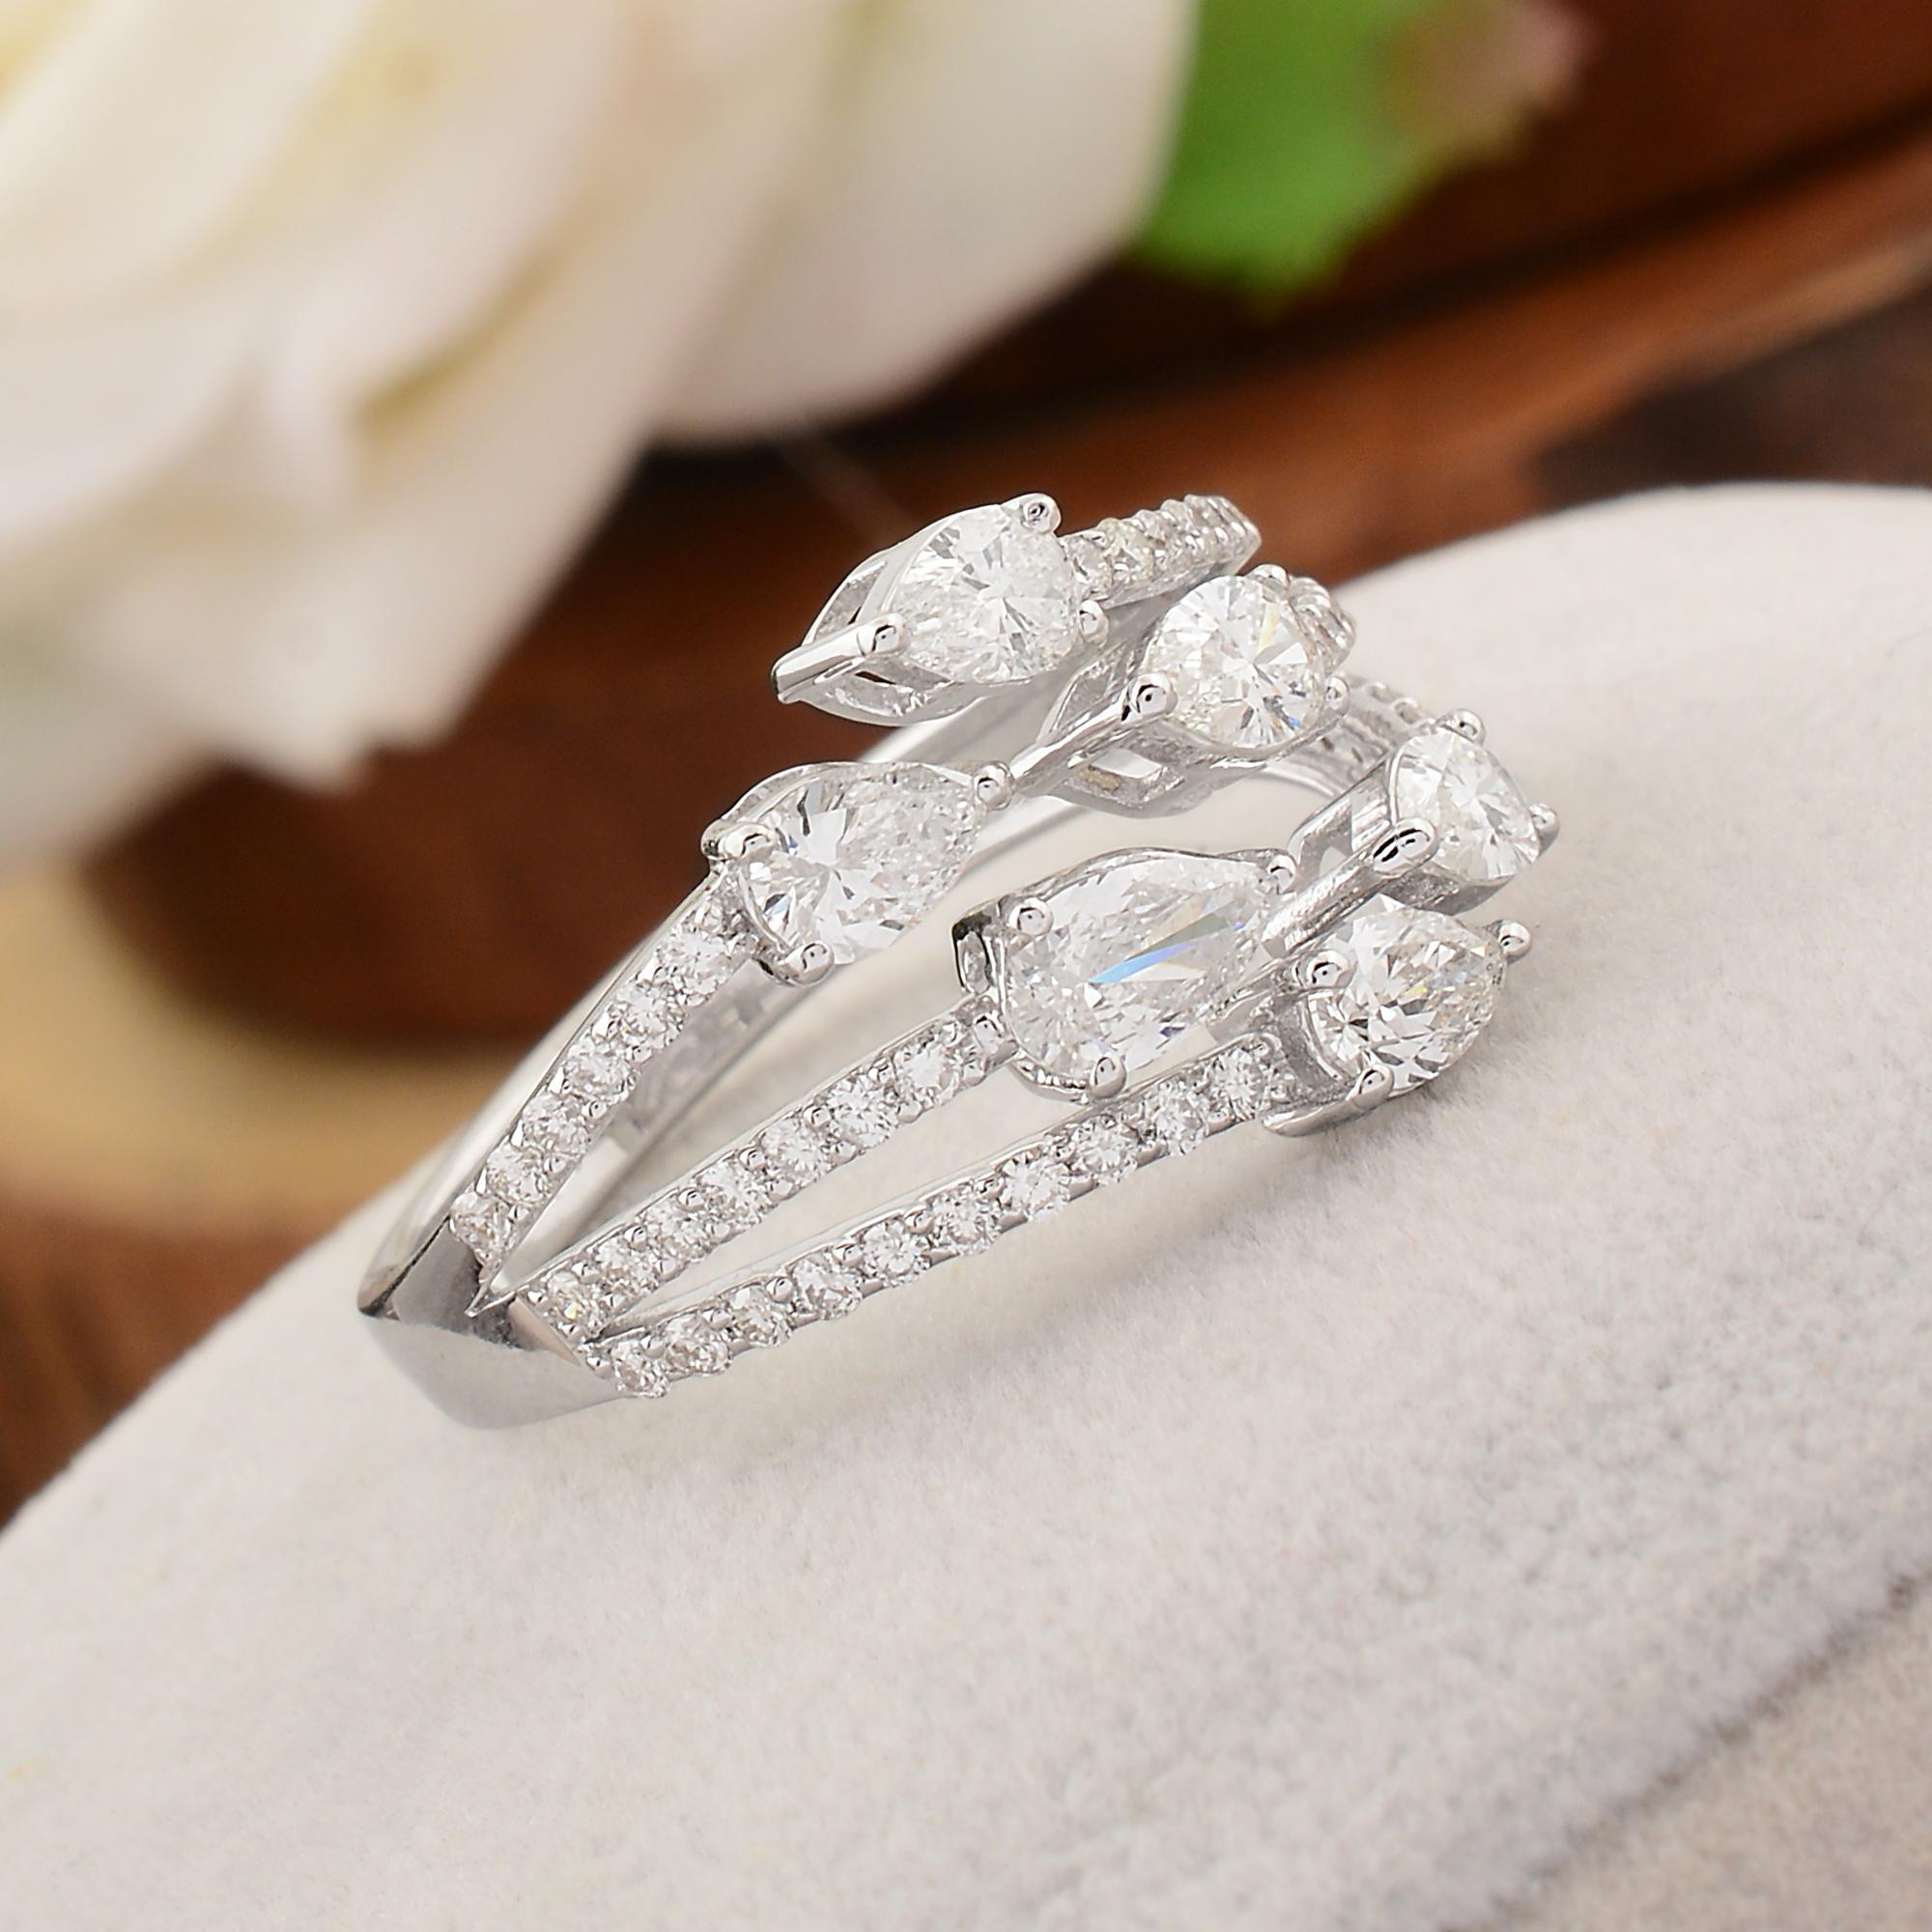 For Sale:  1.3 Carat SI Clarity HI Color Pear Diamond Cuff Ring 18 Karat White Gold Jewelry 4